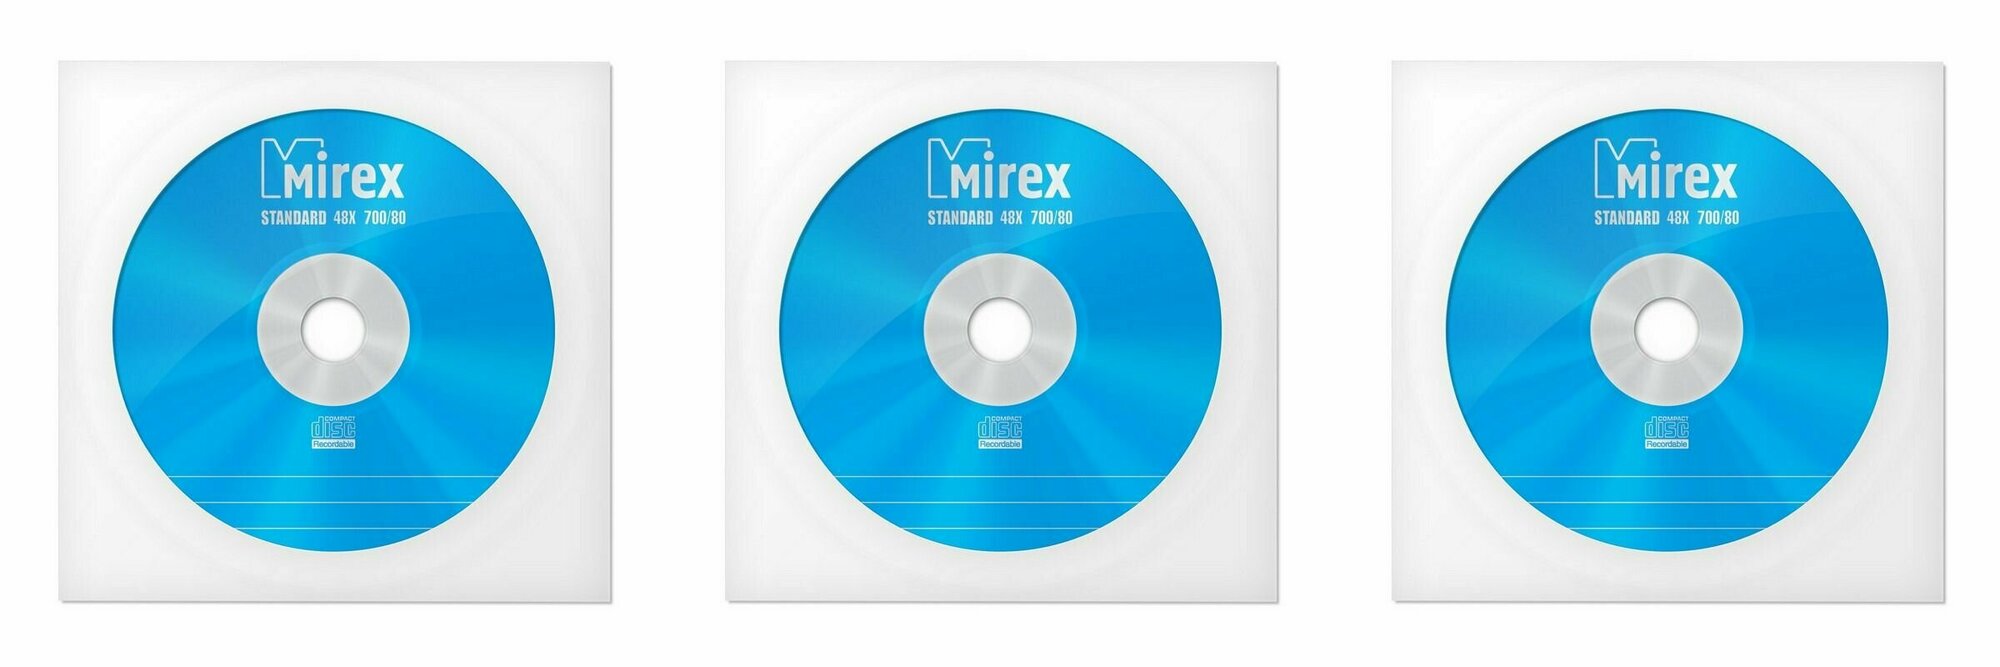 Mirex Диск Standart CD-R80/700MB 48x, 3 шт